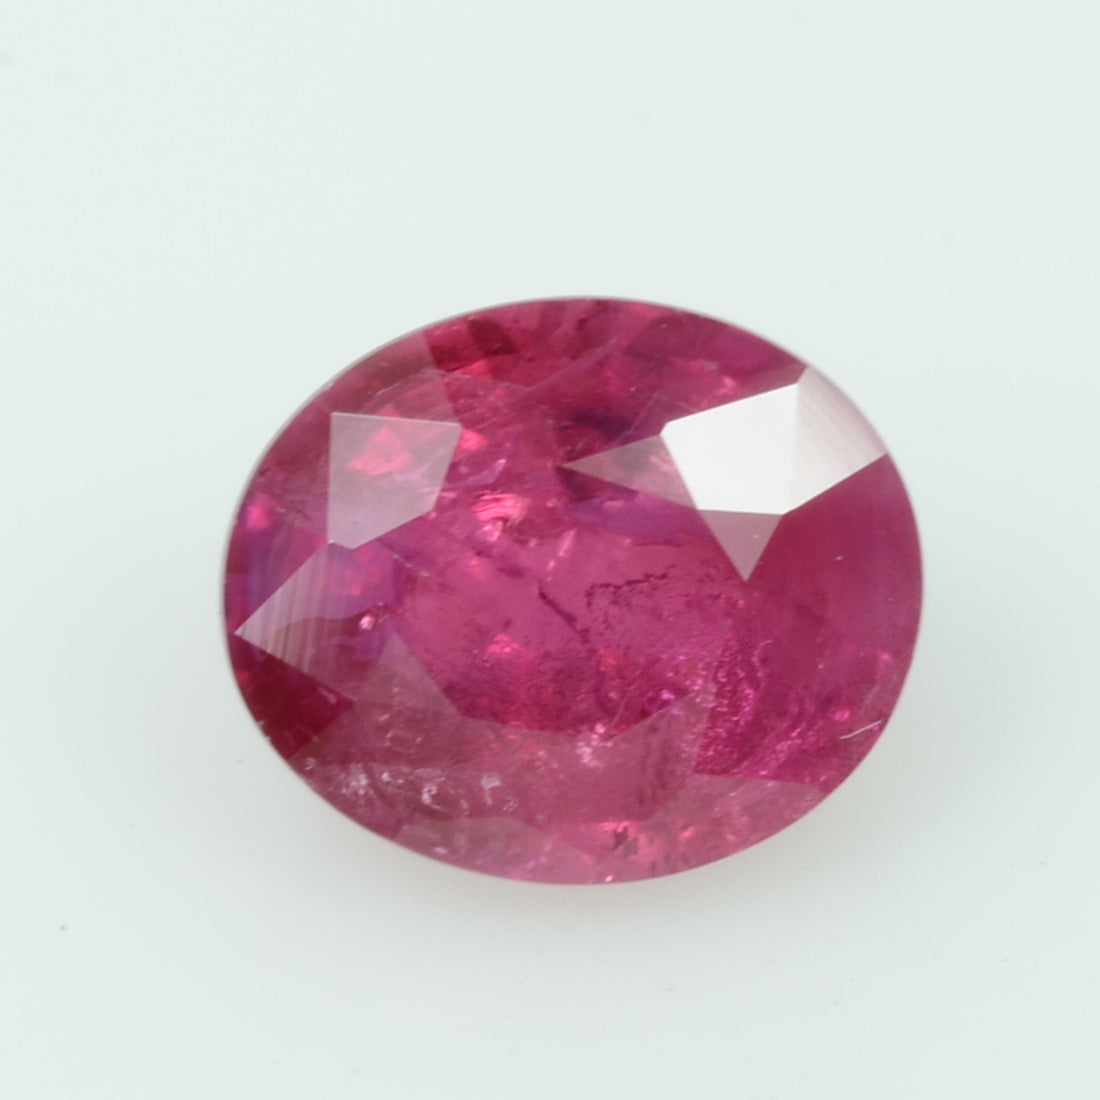 1.62 cts Natural Burma Ruby Loose Gemstone Oval Cut - Thai Gems Export Ltd.